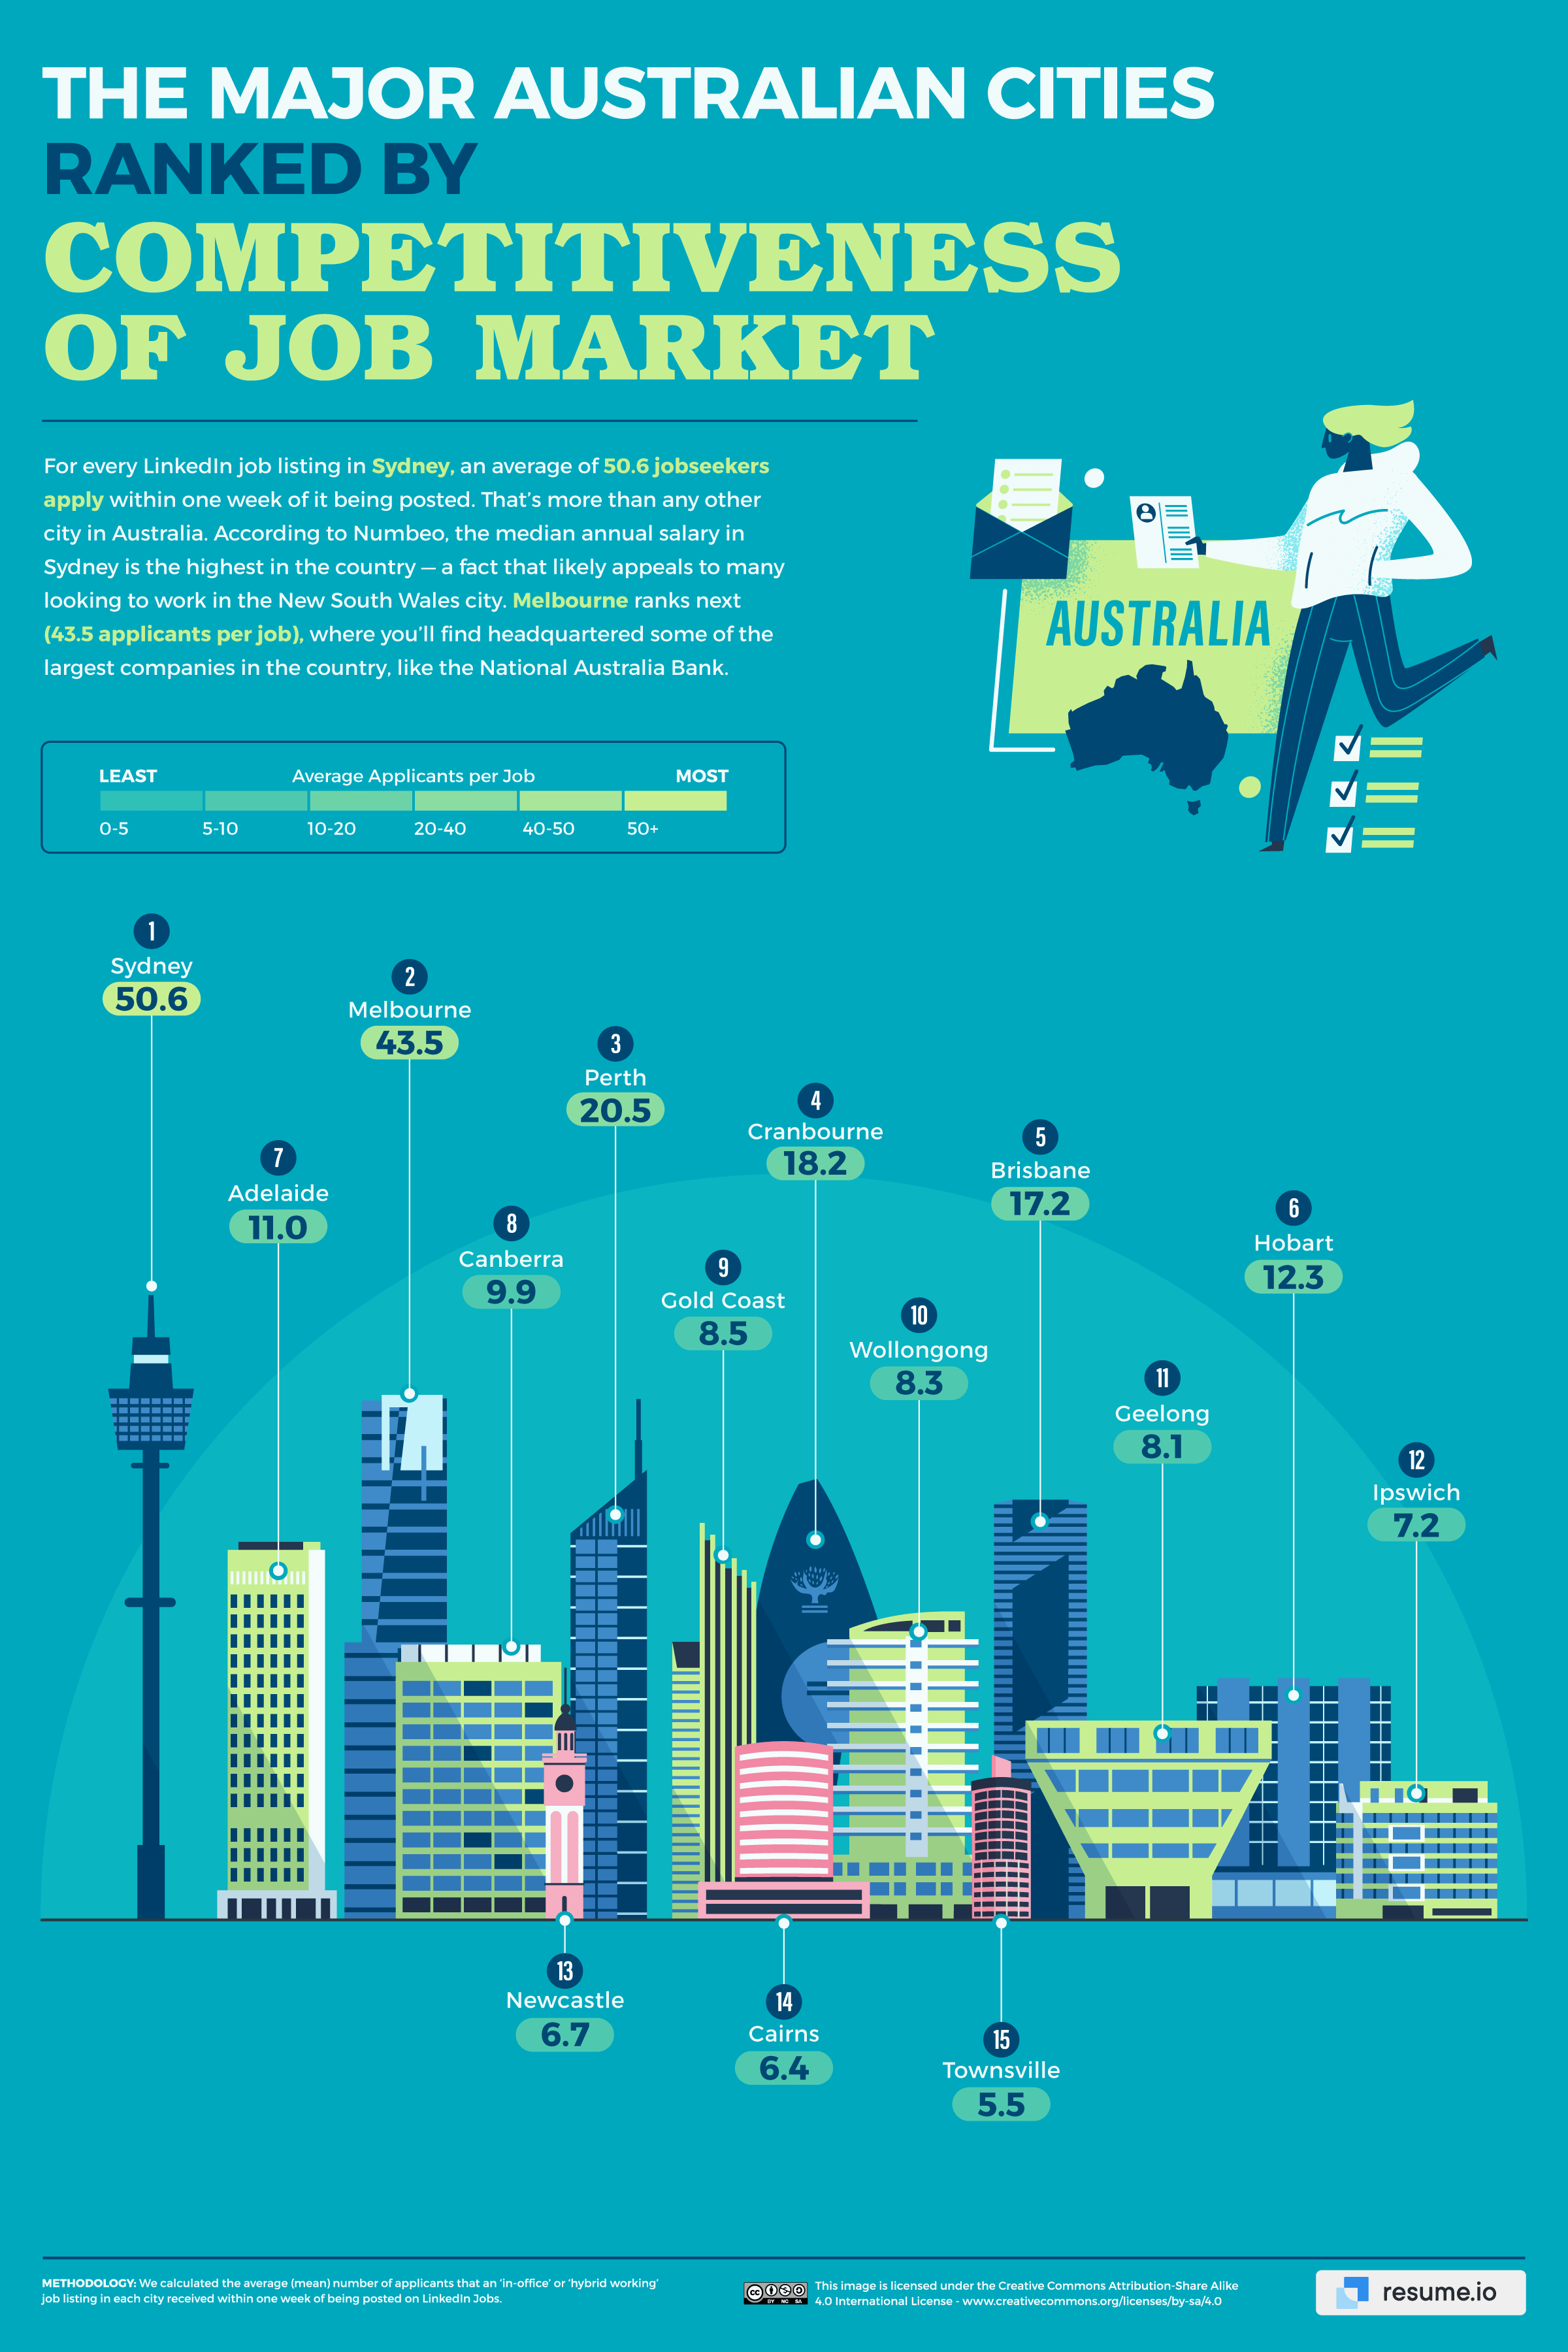 Ranking of the job market competitiveness among the major Australian cities